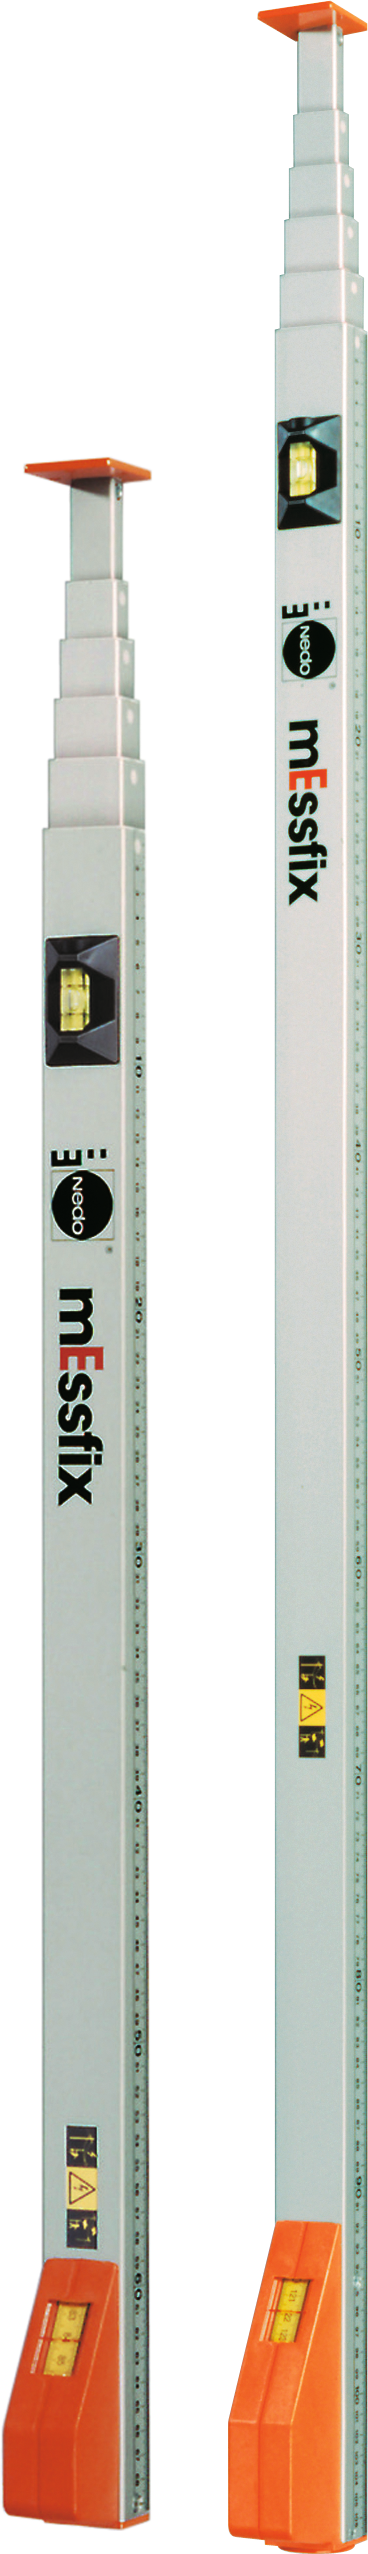 Längenmaßstab mEssfix compact mit Teleskopauszugmm-Teilung MB0,60-3,04m